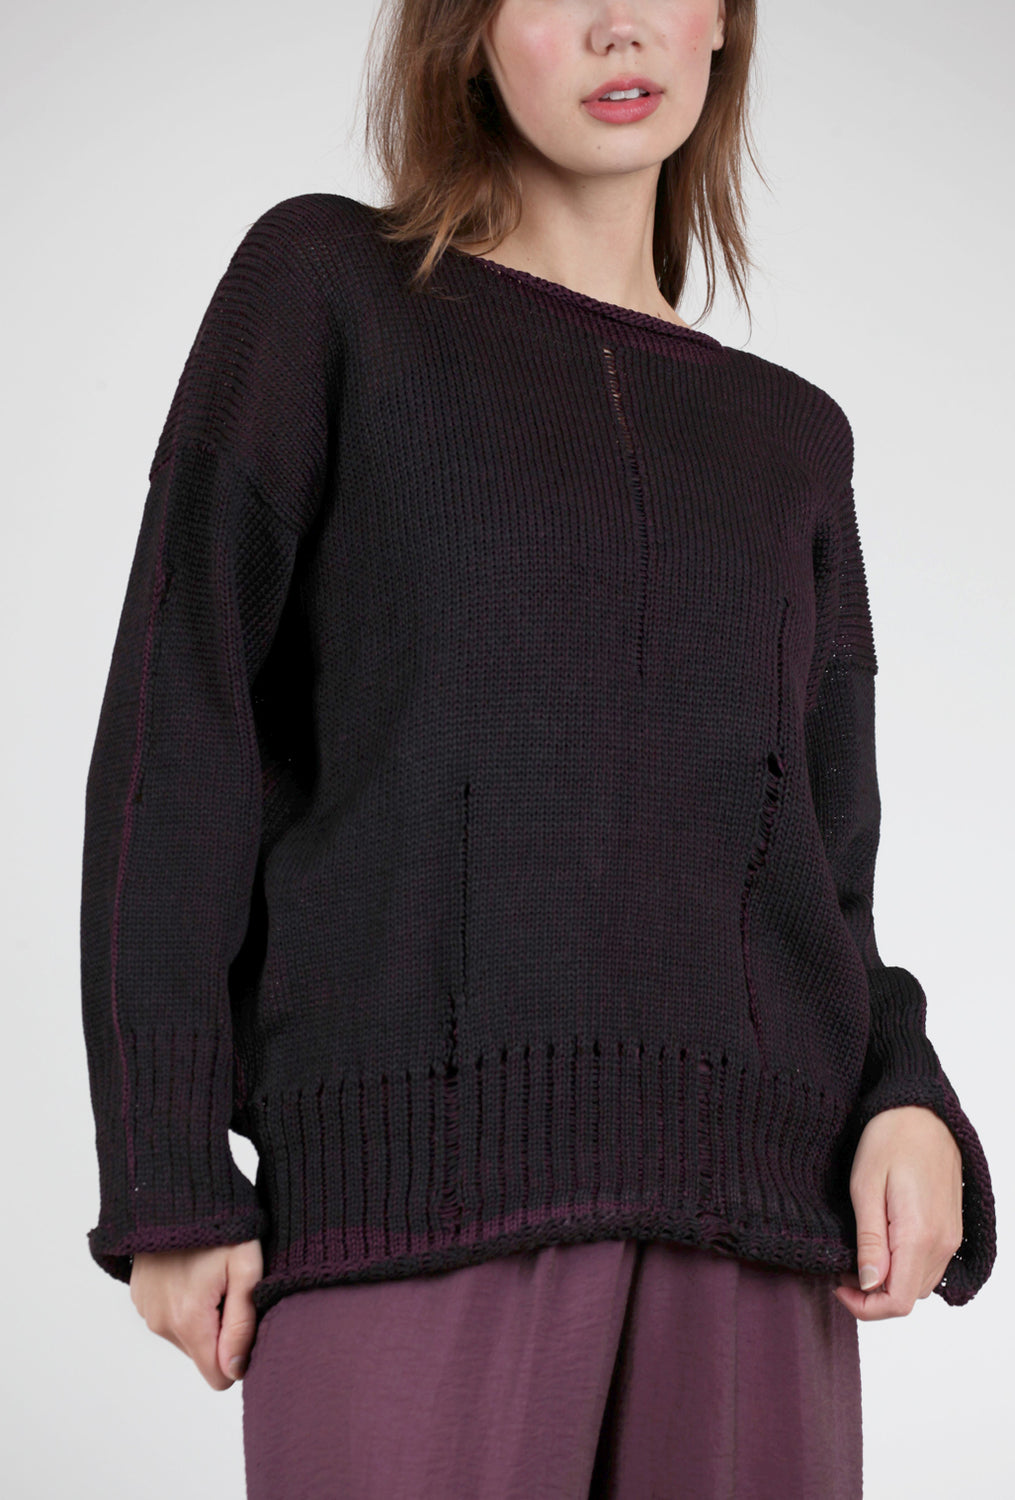 Skif Bernie Sweater, Aubergine/Black 